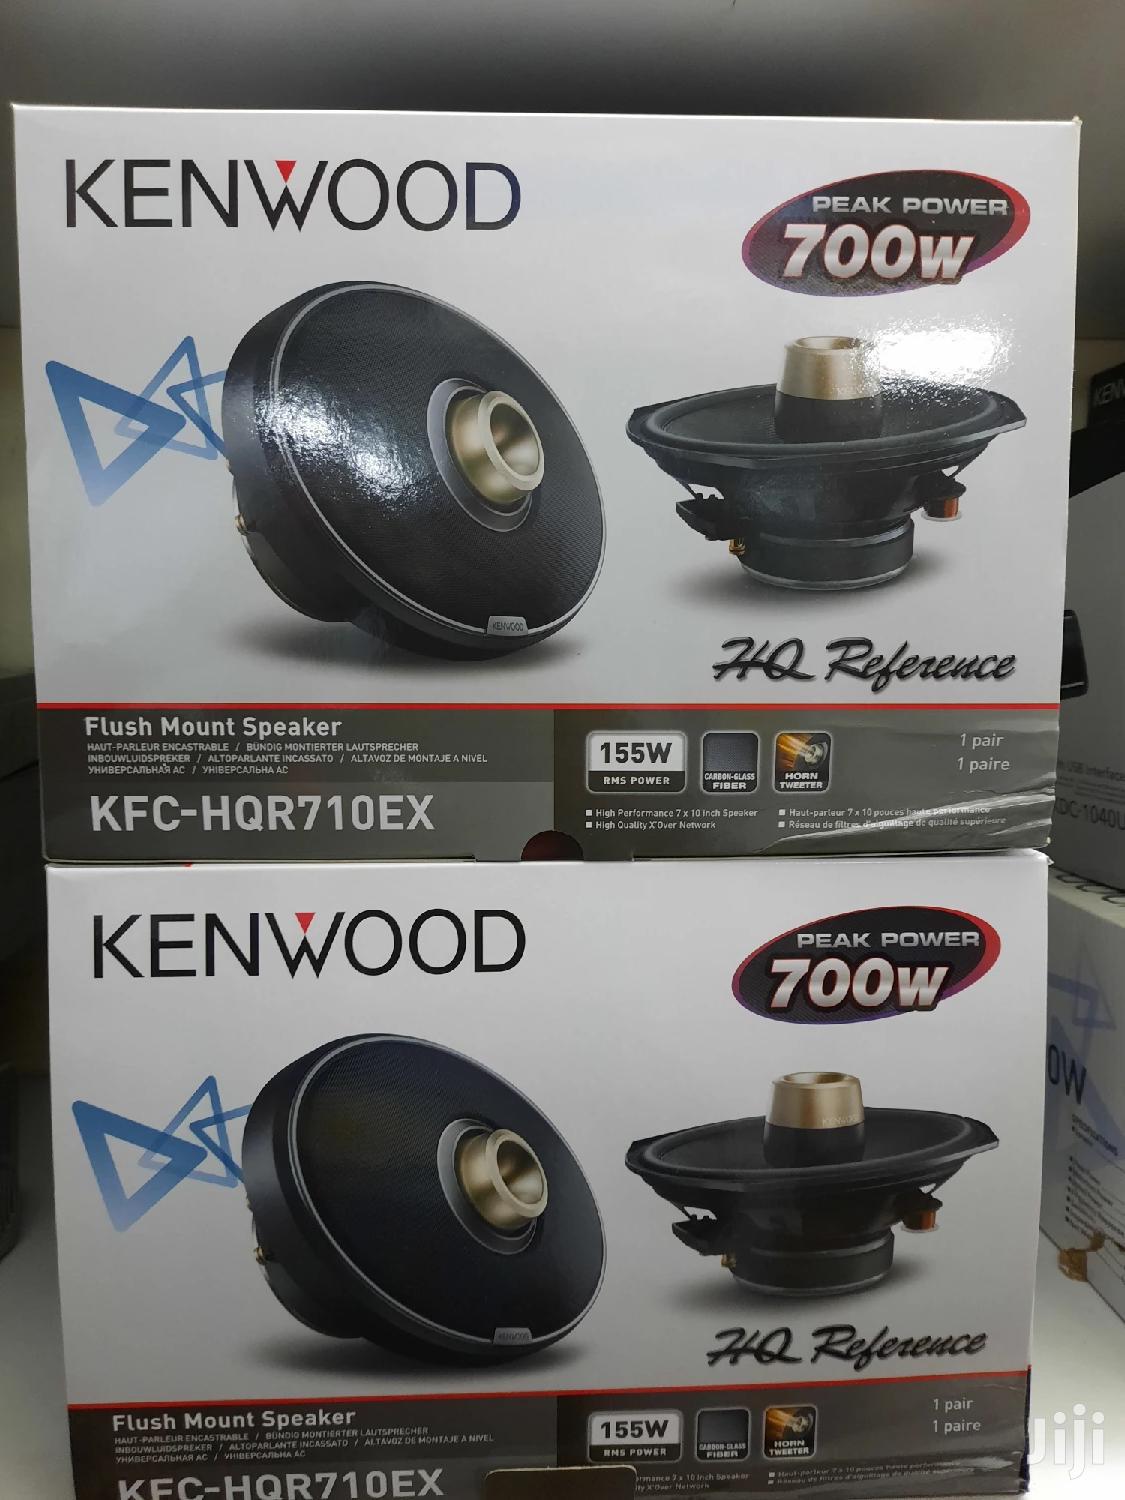  KFC-HQR710EX high performance car speakers best price in Kenya .